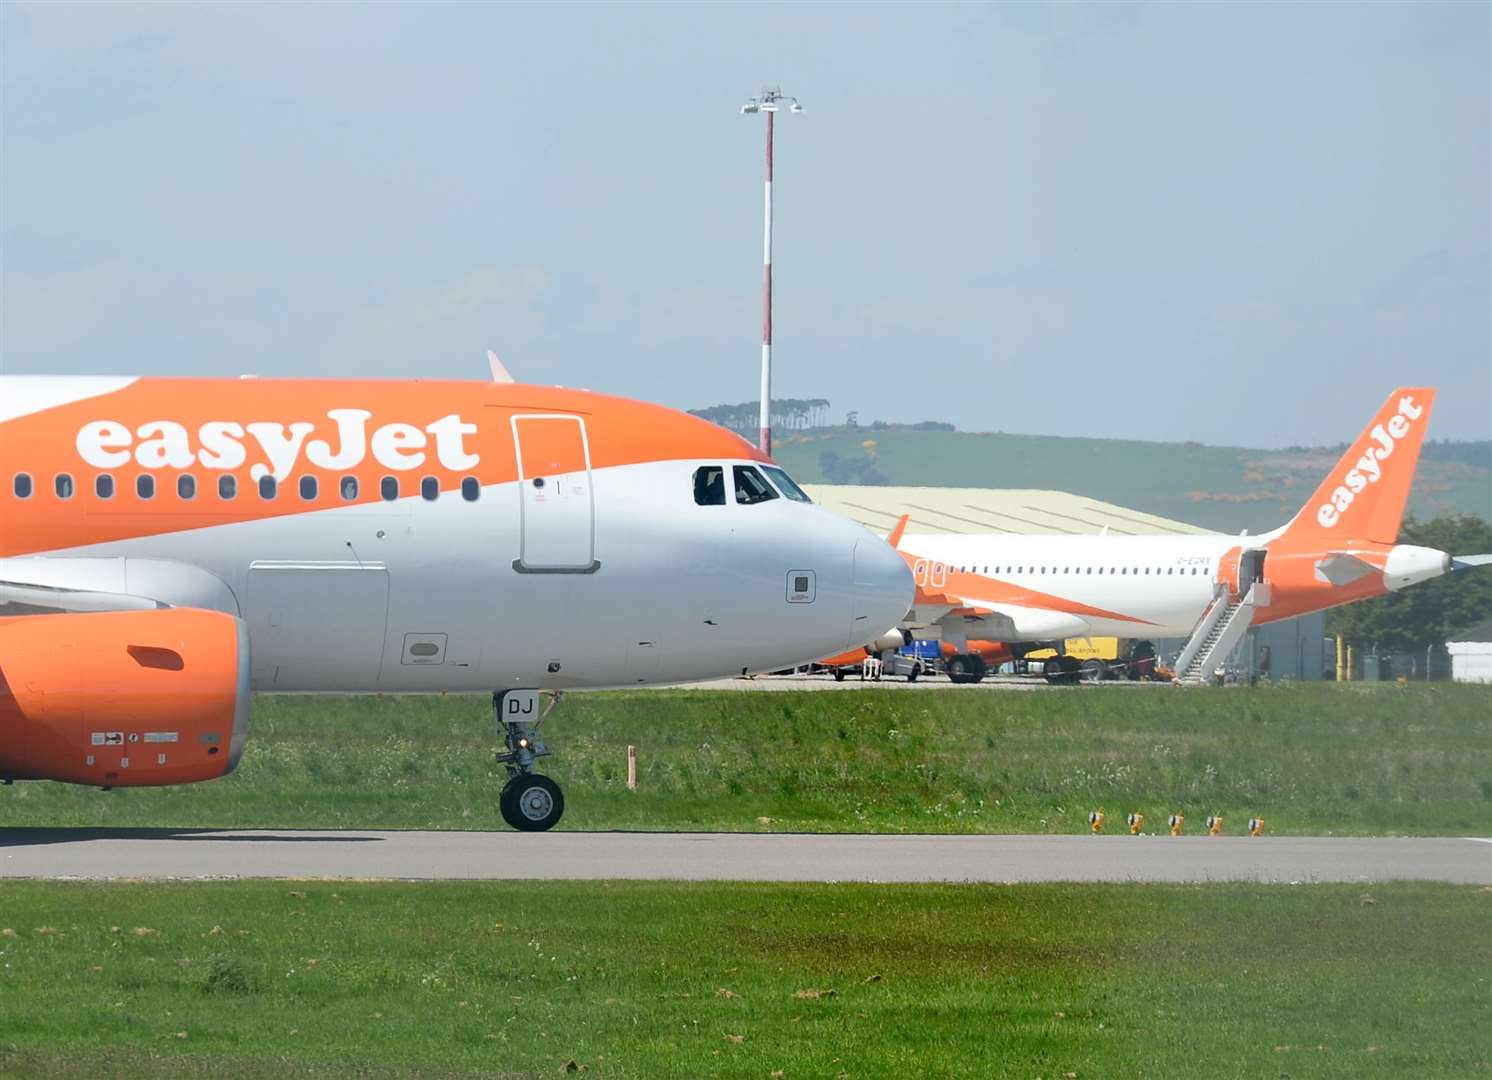 easyJet aircraft at Inverness Airport.